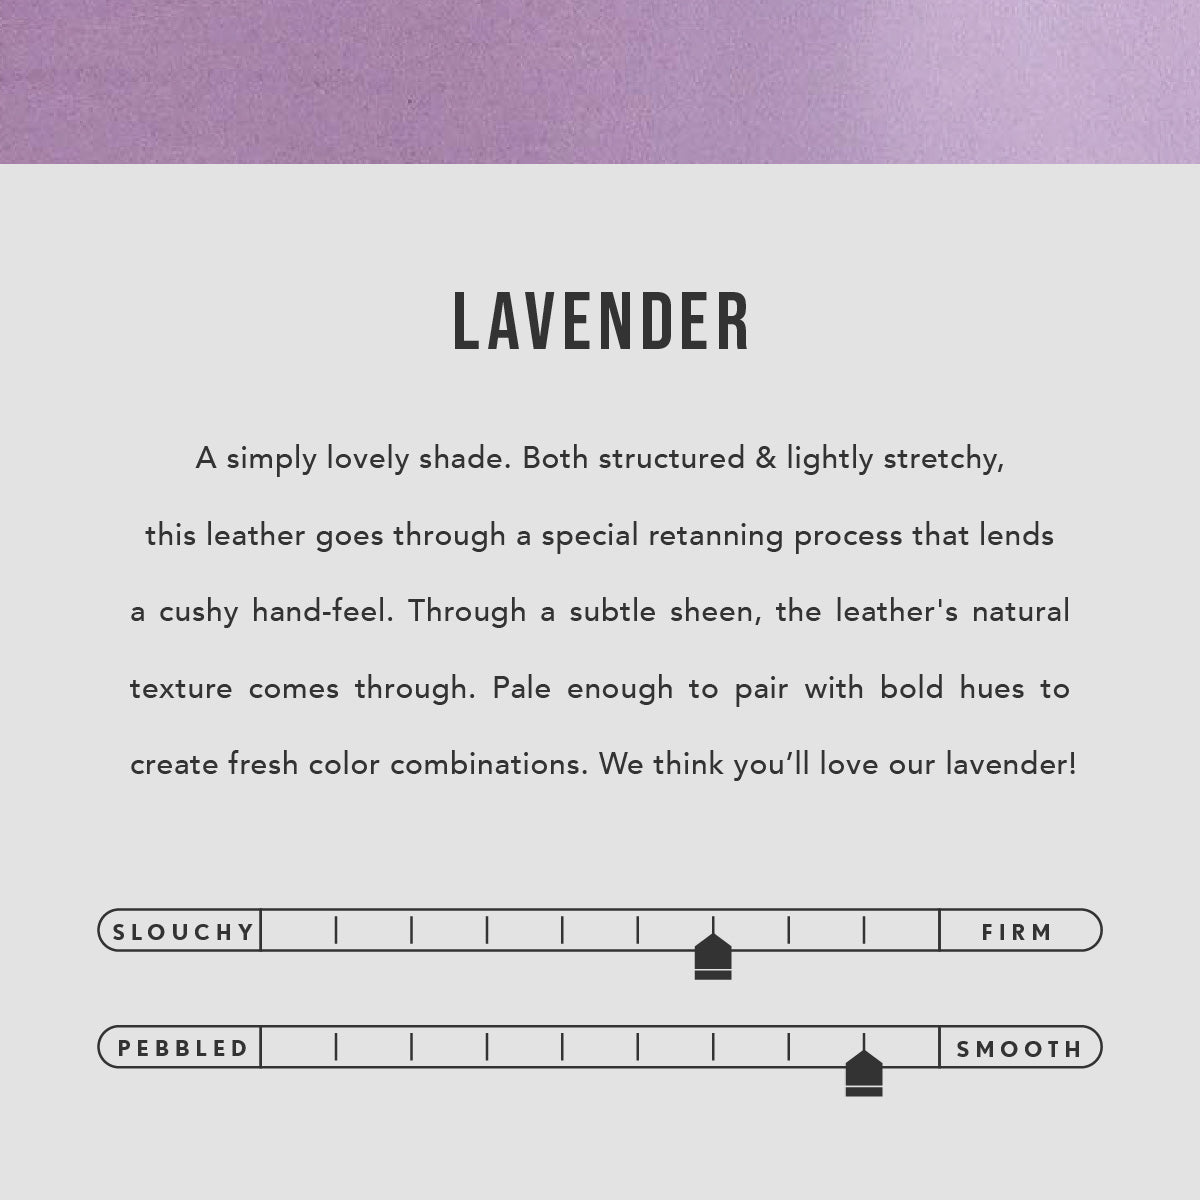 Lavender | infographic